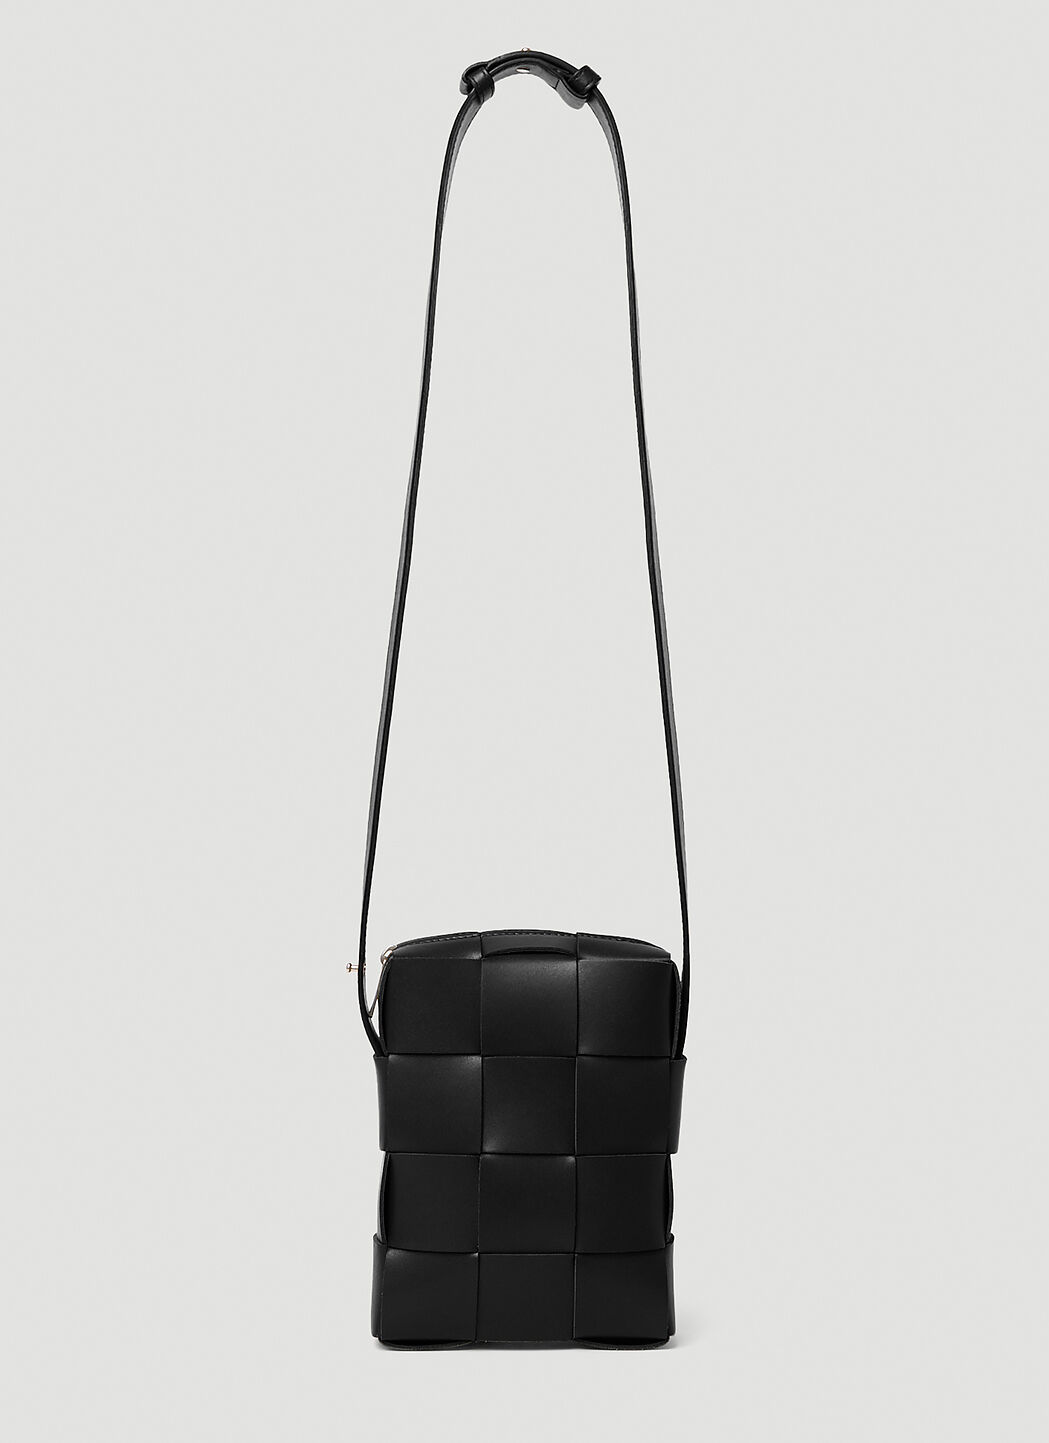 Vivienne Westwood 盒式结构拉链手机袋 橙色 vvw0156015